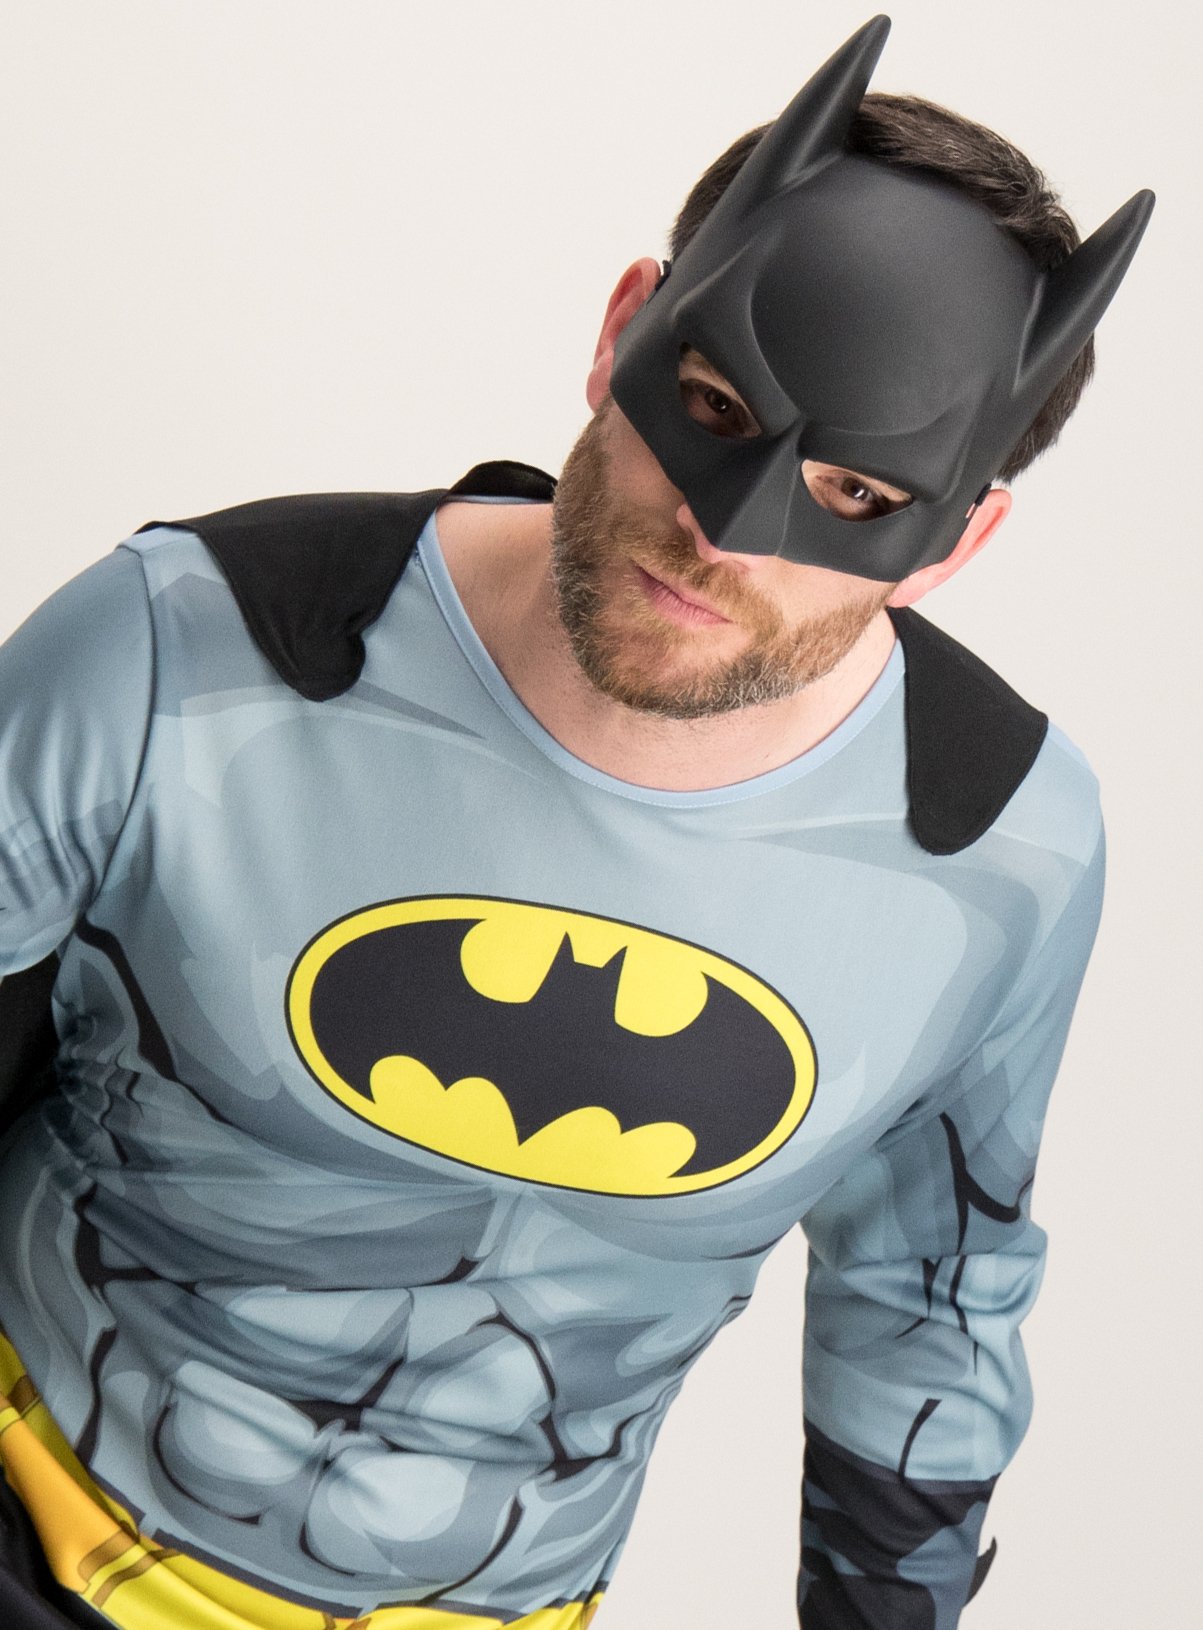 RUBIE'S DC Comics Batman Costume & Mask Review